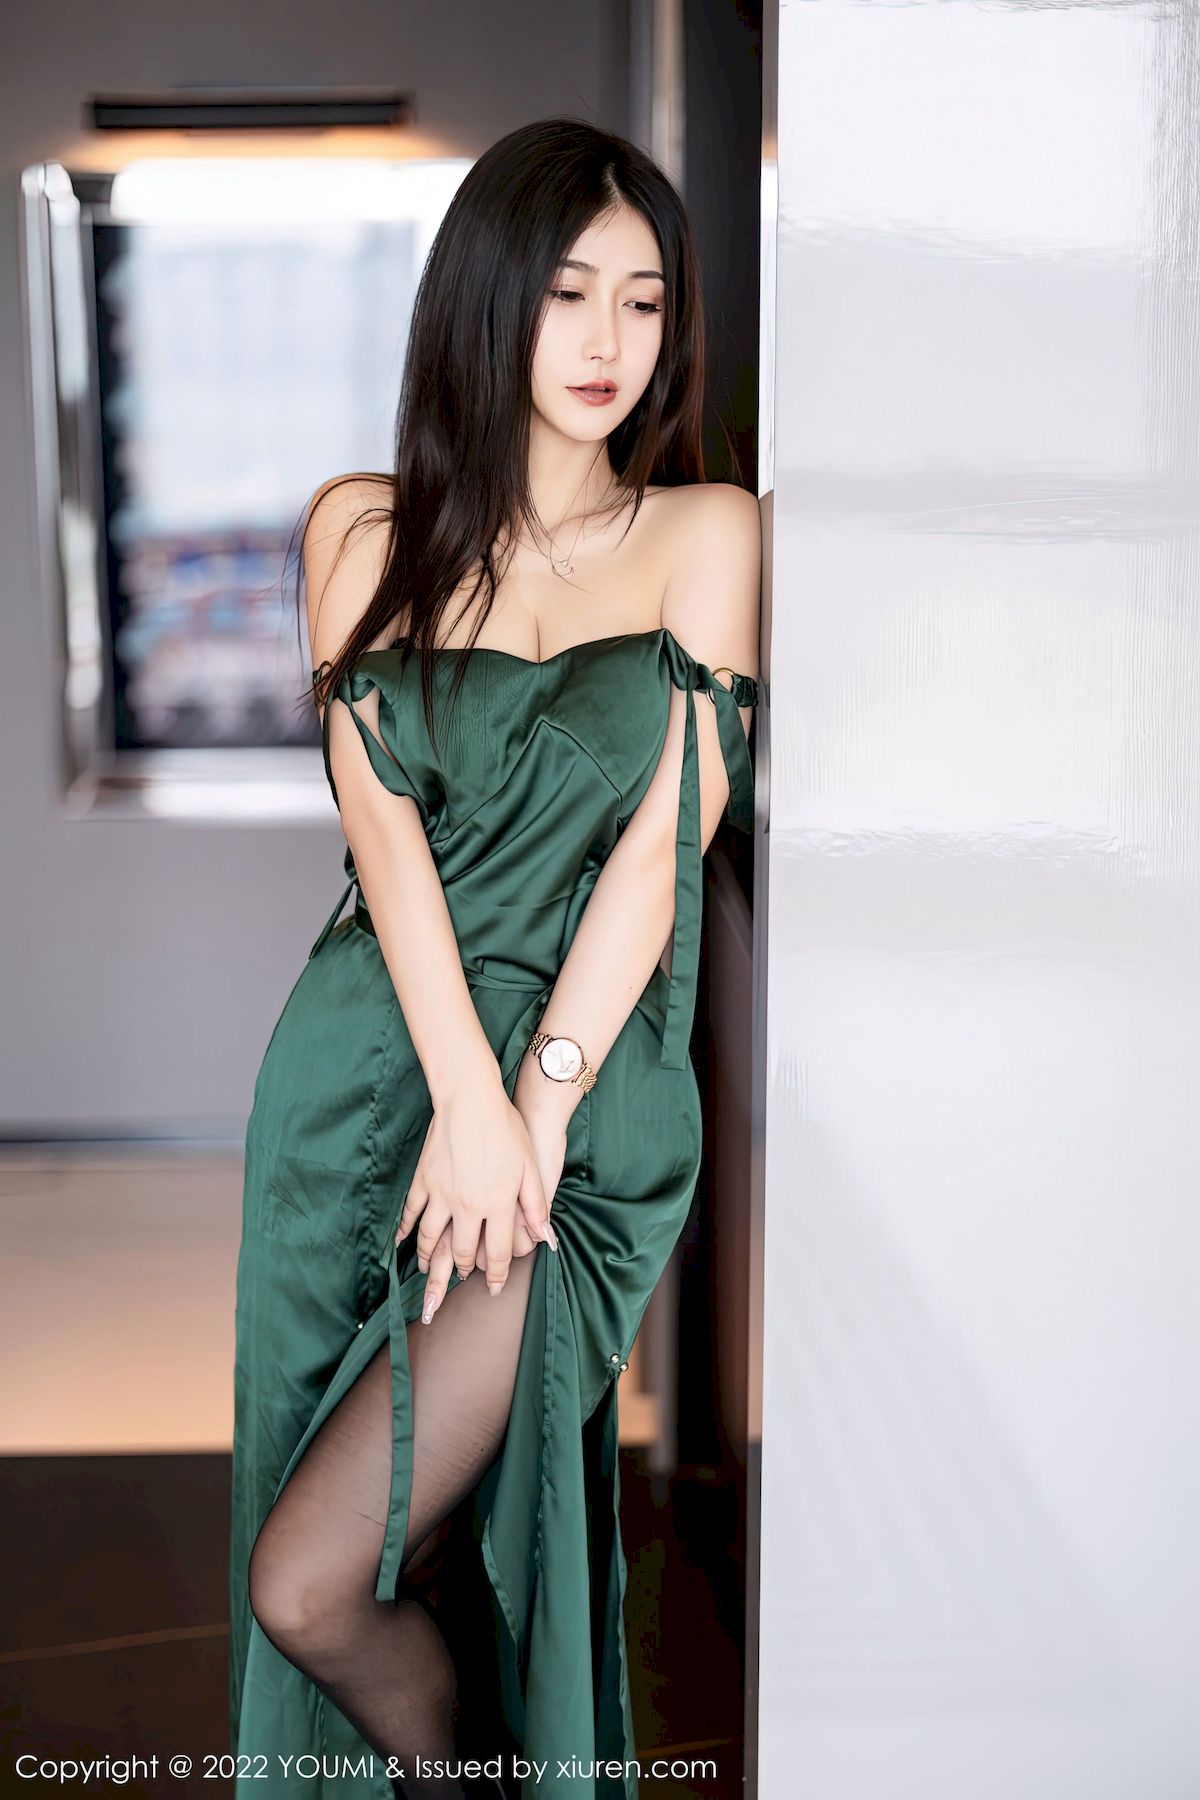 laura阿姣 - 暗绿色长裙+黑丝长腿性感写真